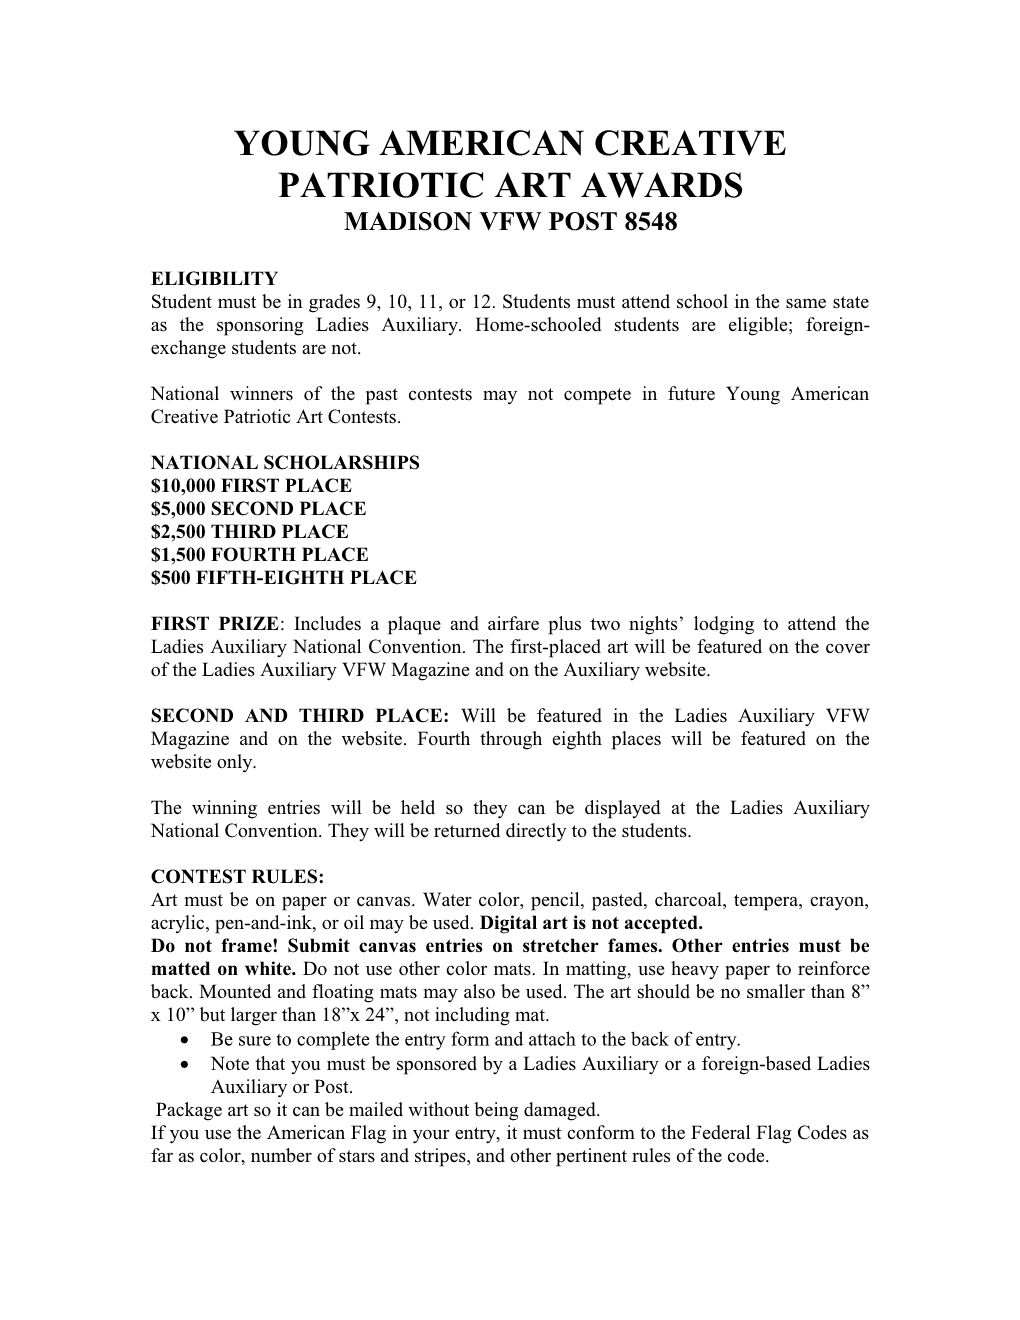 Young American Creative Patriotic Art Awards